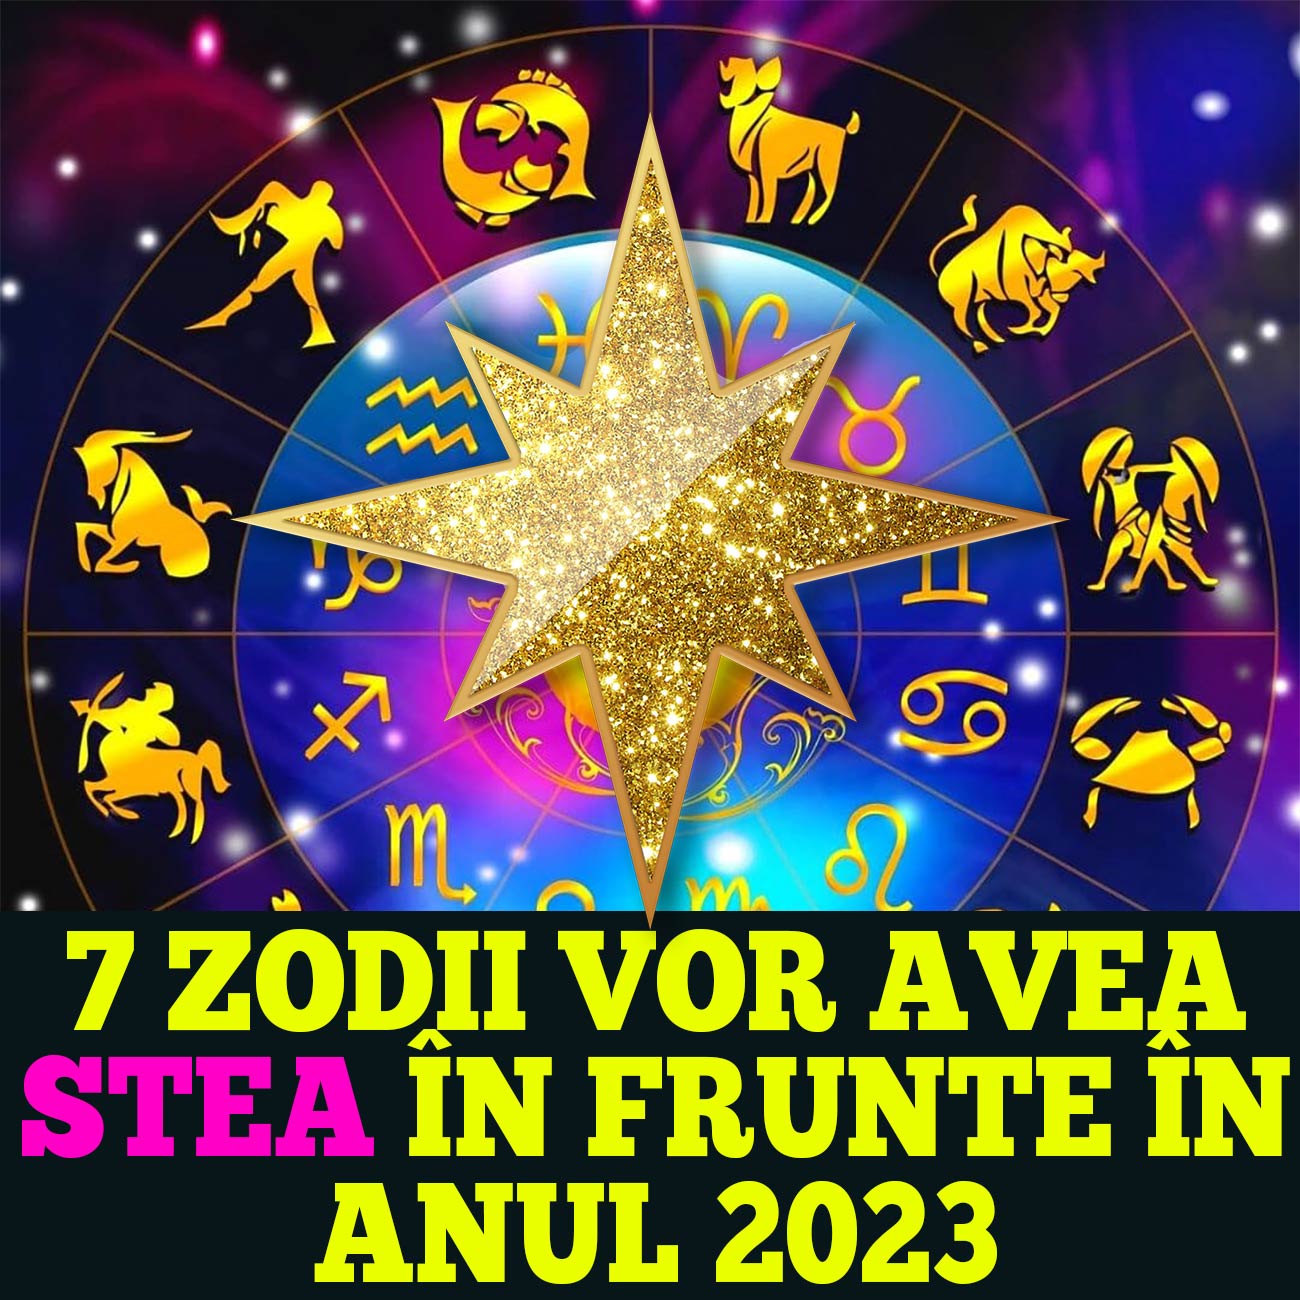 7 zodii vor avea stea in frunte in anul 2023